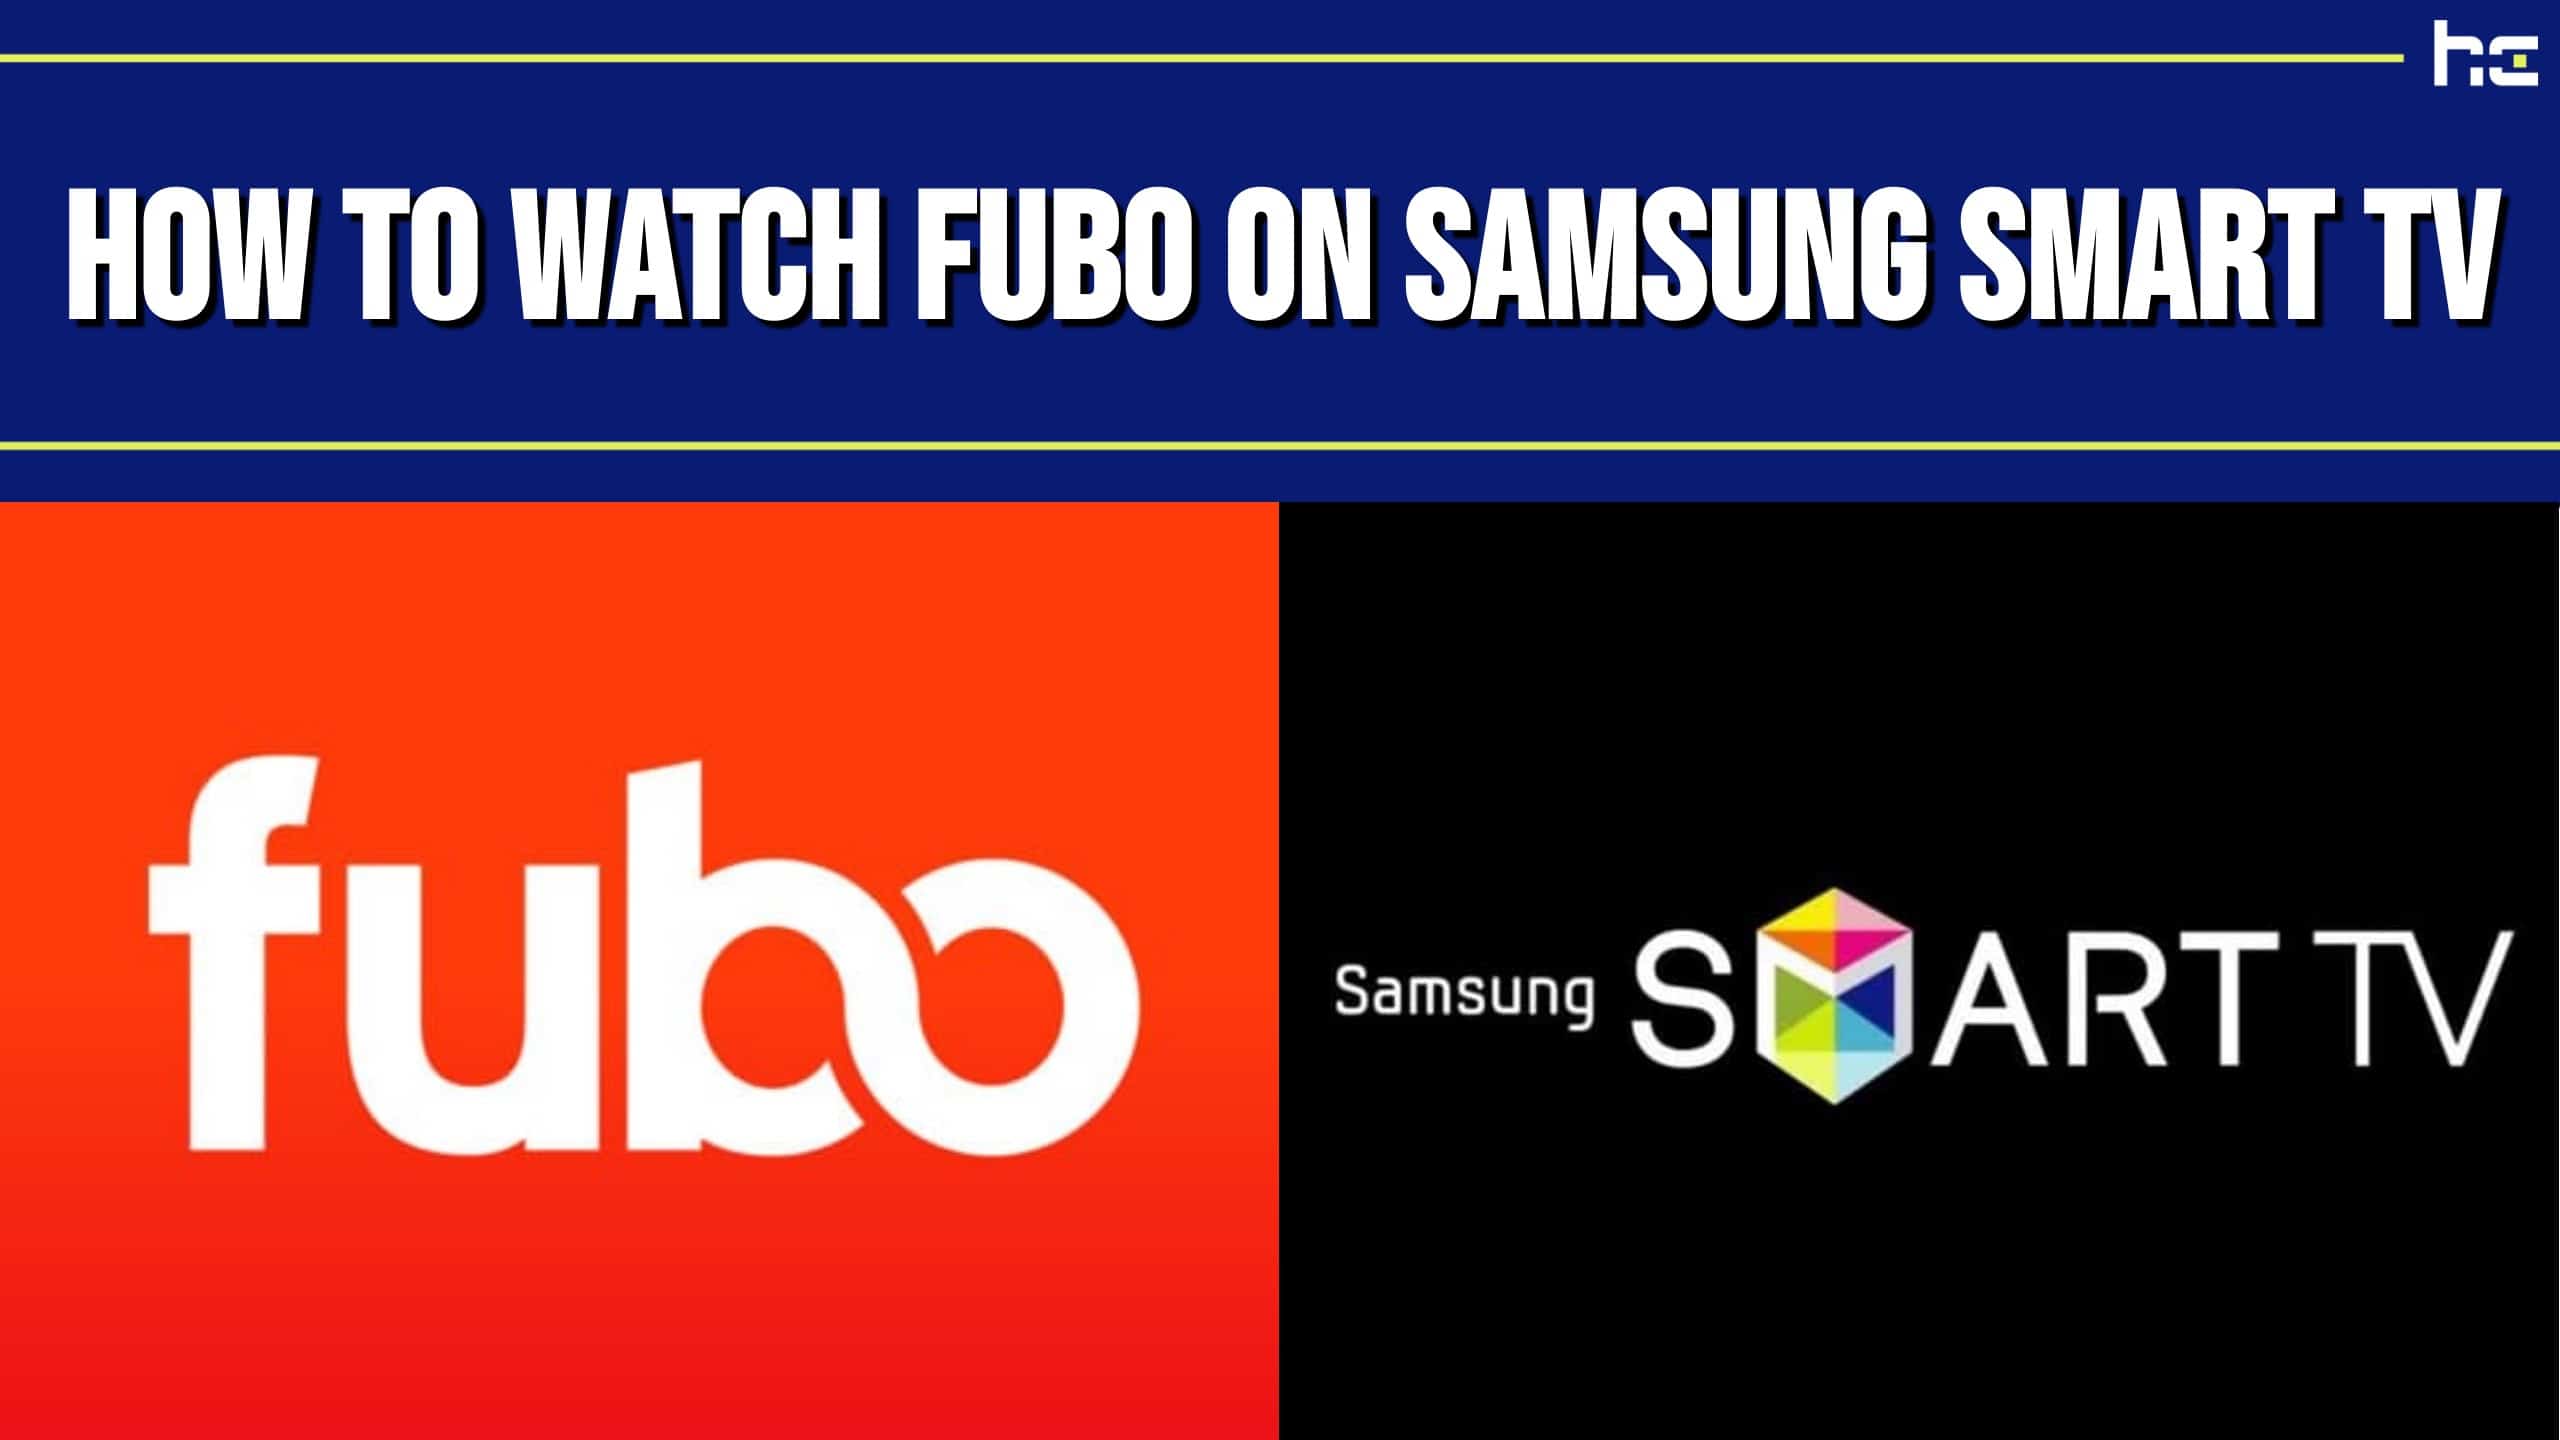 Watch Fubo on Samsung smart TV